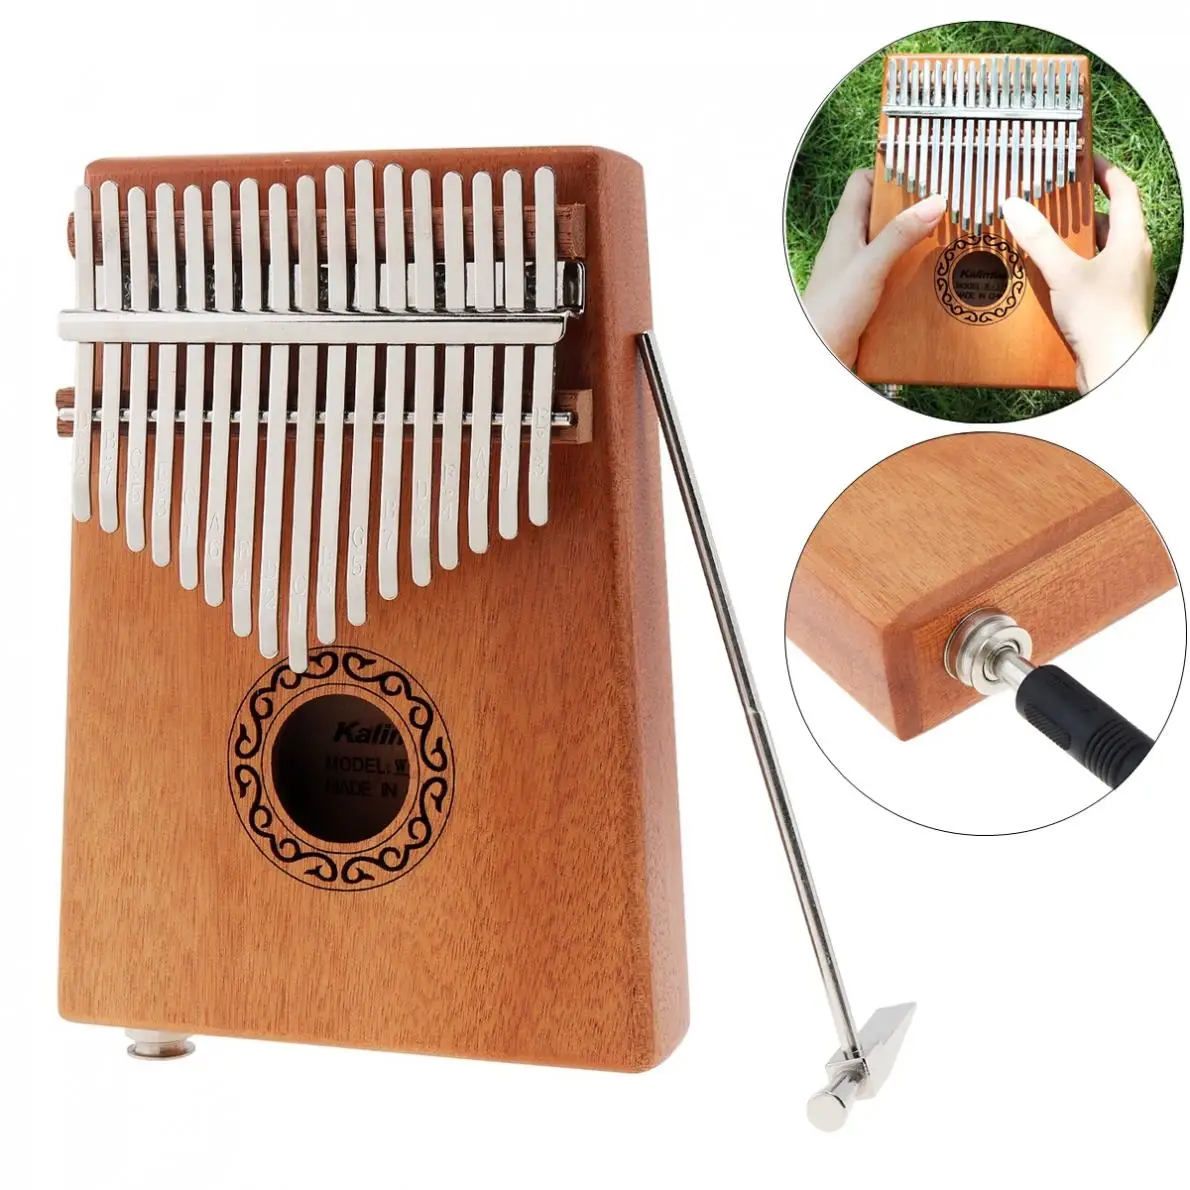 

17 Key Electroacoustic Kalimba Single Board Mahogany Thumb Piano Mbira Mini Keyboard Instrument with Complete Accessories Hot